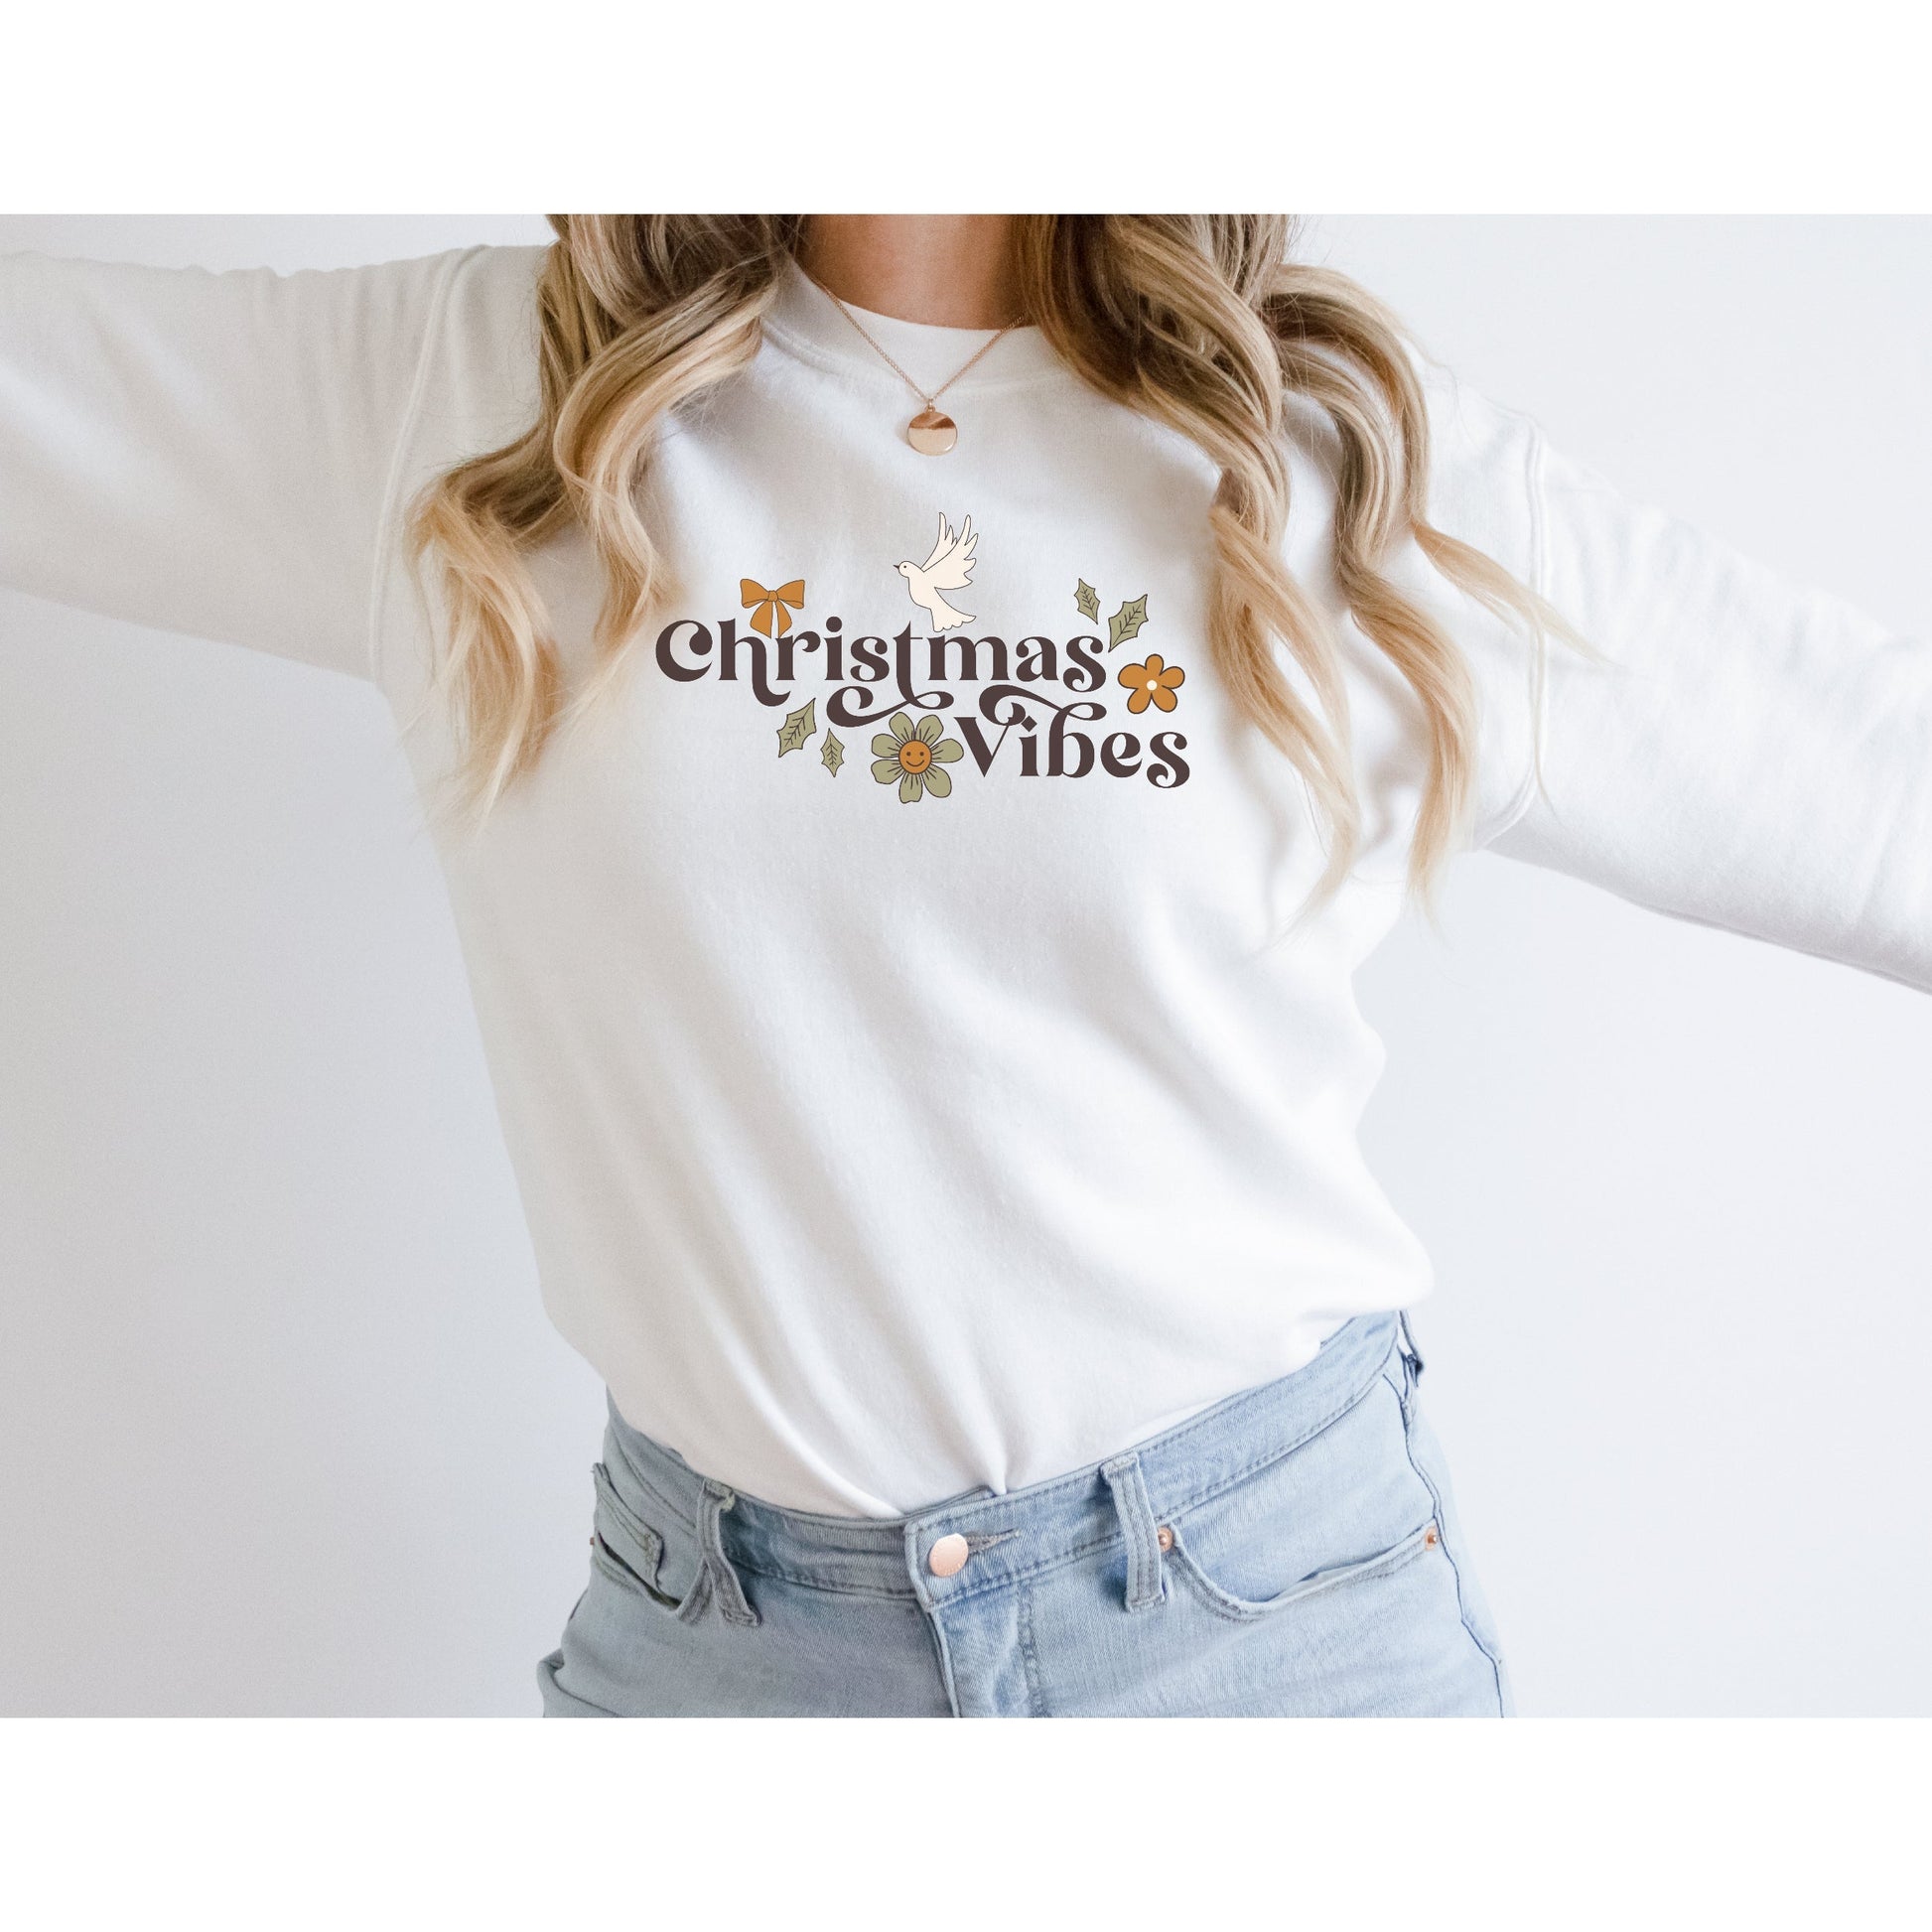 Christmas Sweatshirt, Christmas Vibes, Holiday Sweaters For Women, Christmas Sweater, Retro Holiday Shirt, Crewneck, UNISEX, 70s - Premium Sweatshirt - Just $29.50! Shop now at Nine Thirty Nine Design